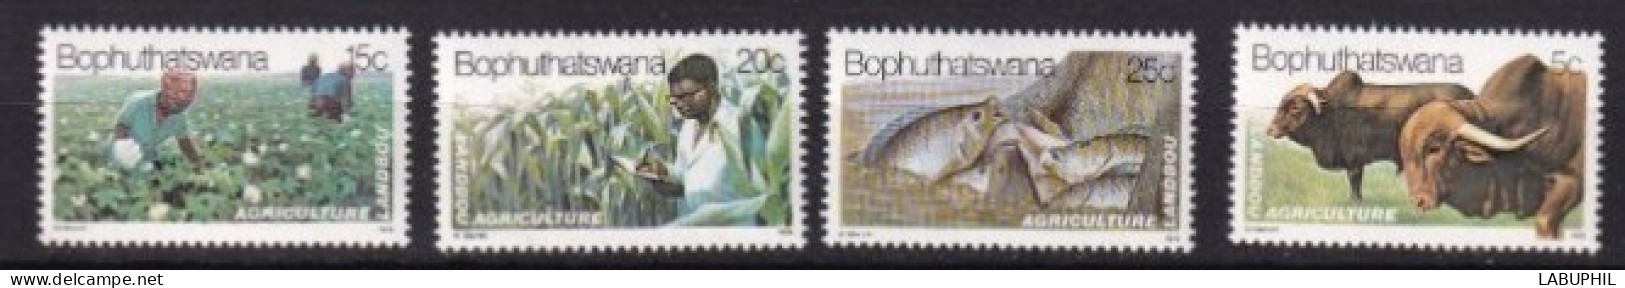 BOPHUYHATSWANA MNH 1979 Agriculture - Bofutatsuana